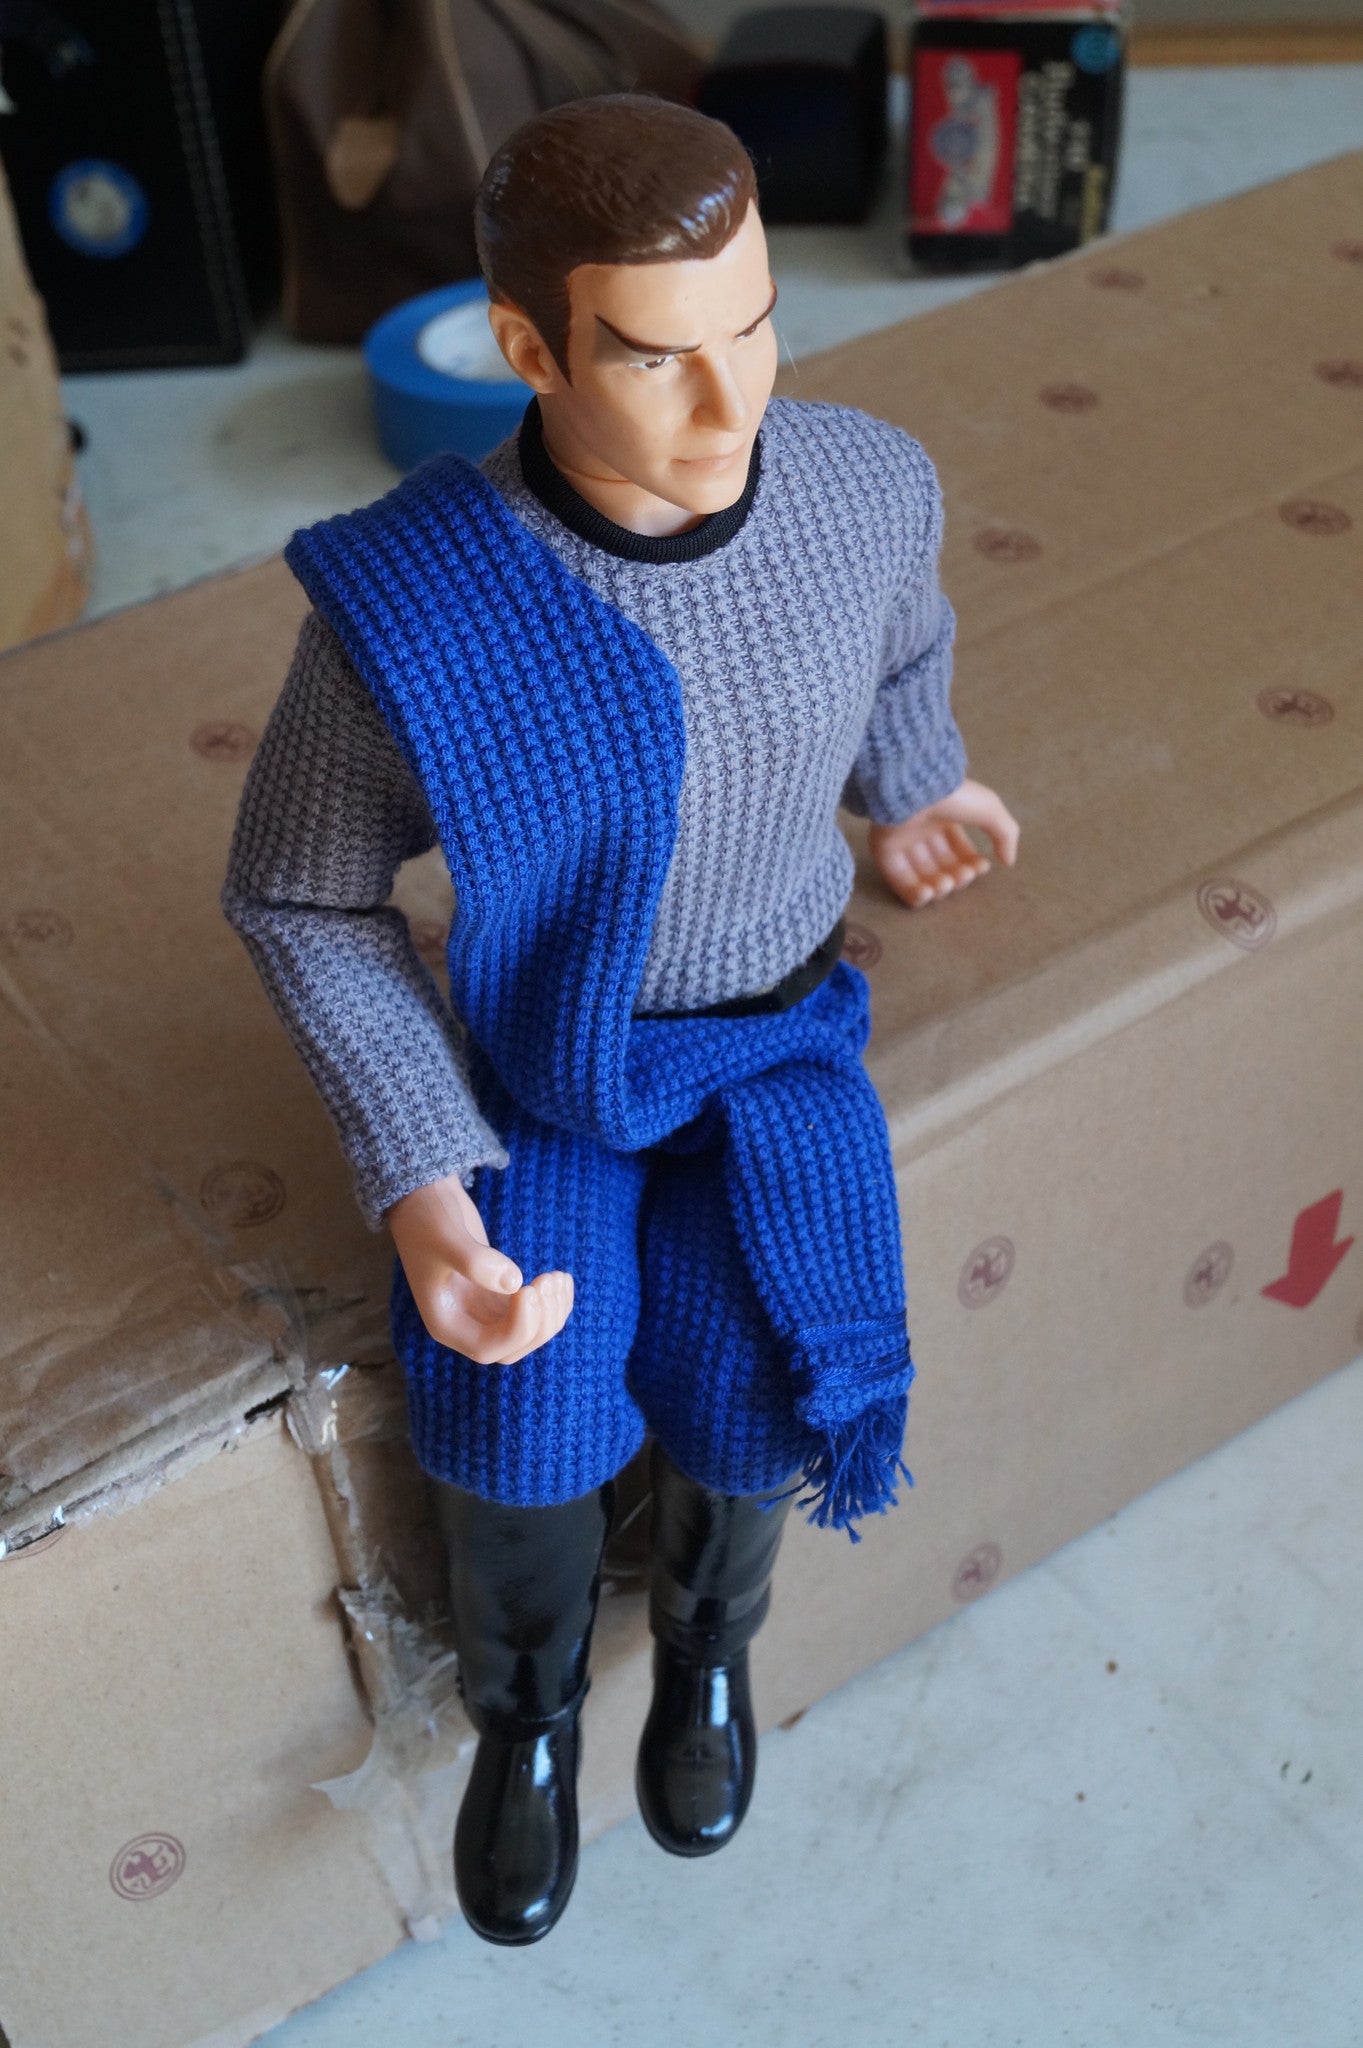 Captain Kirk as A Romulan Porcelain Doll